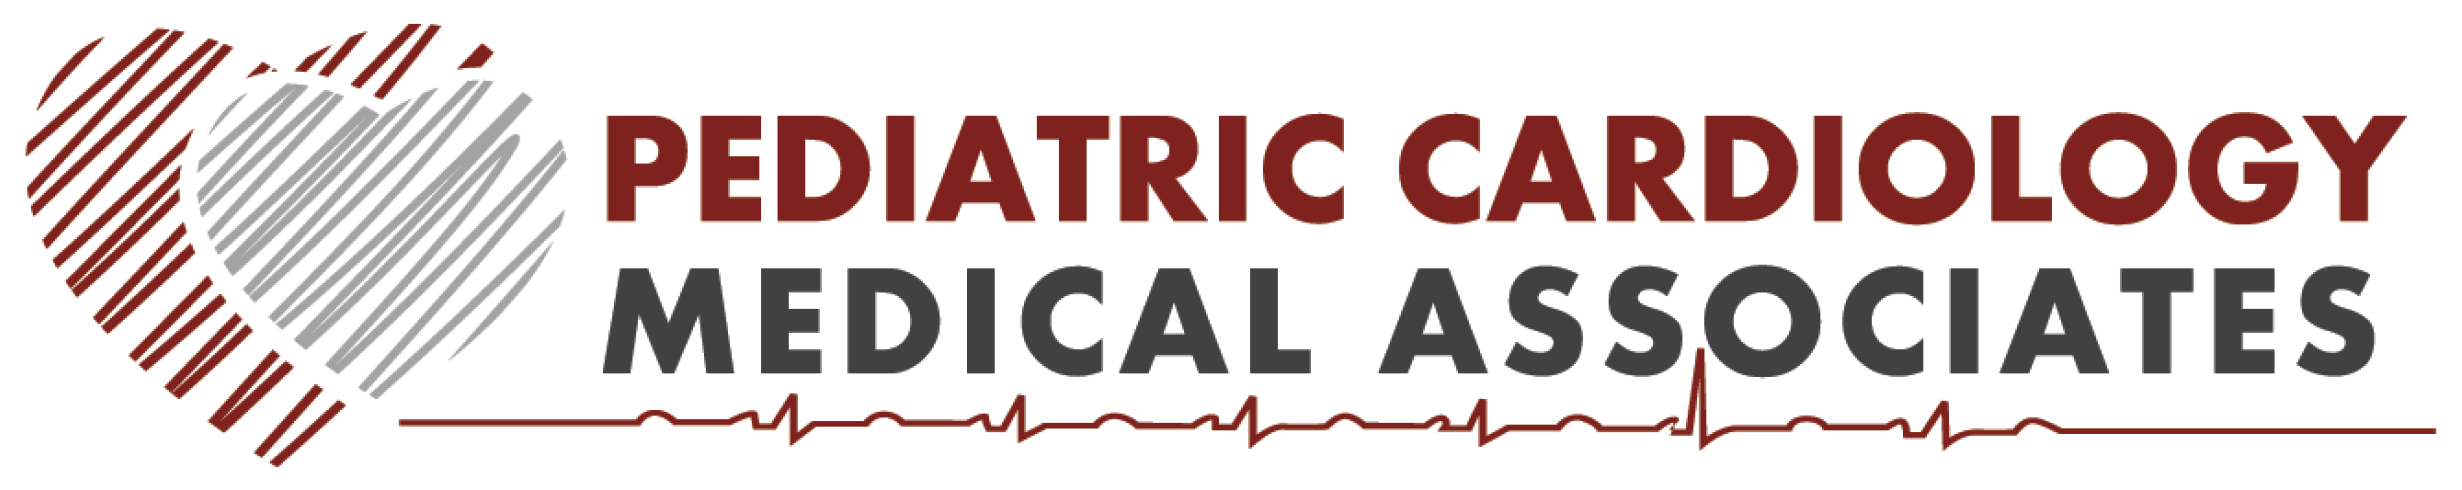 Pediatric Cardiology Medical Associates